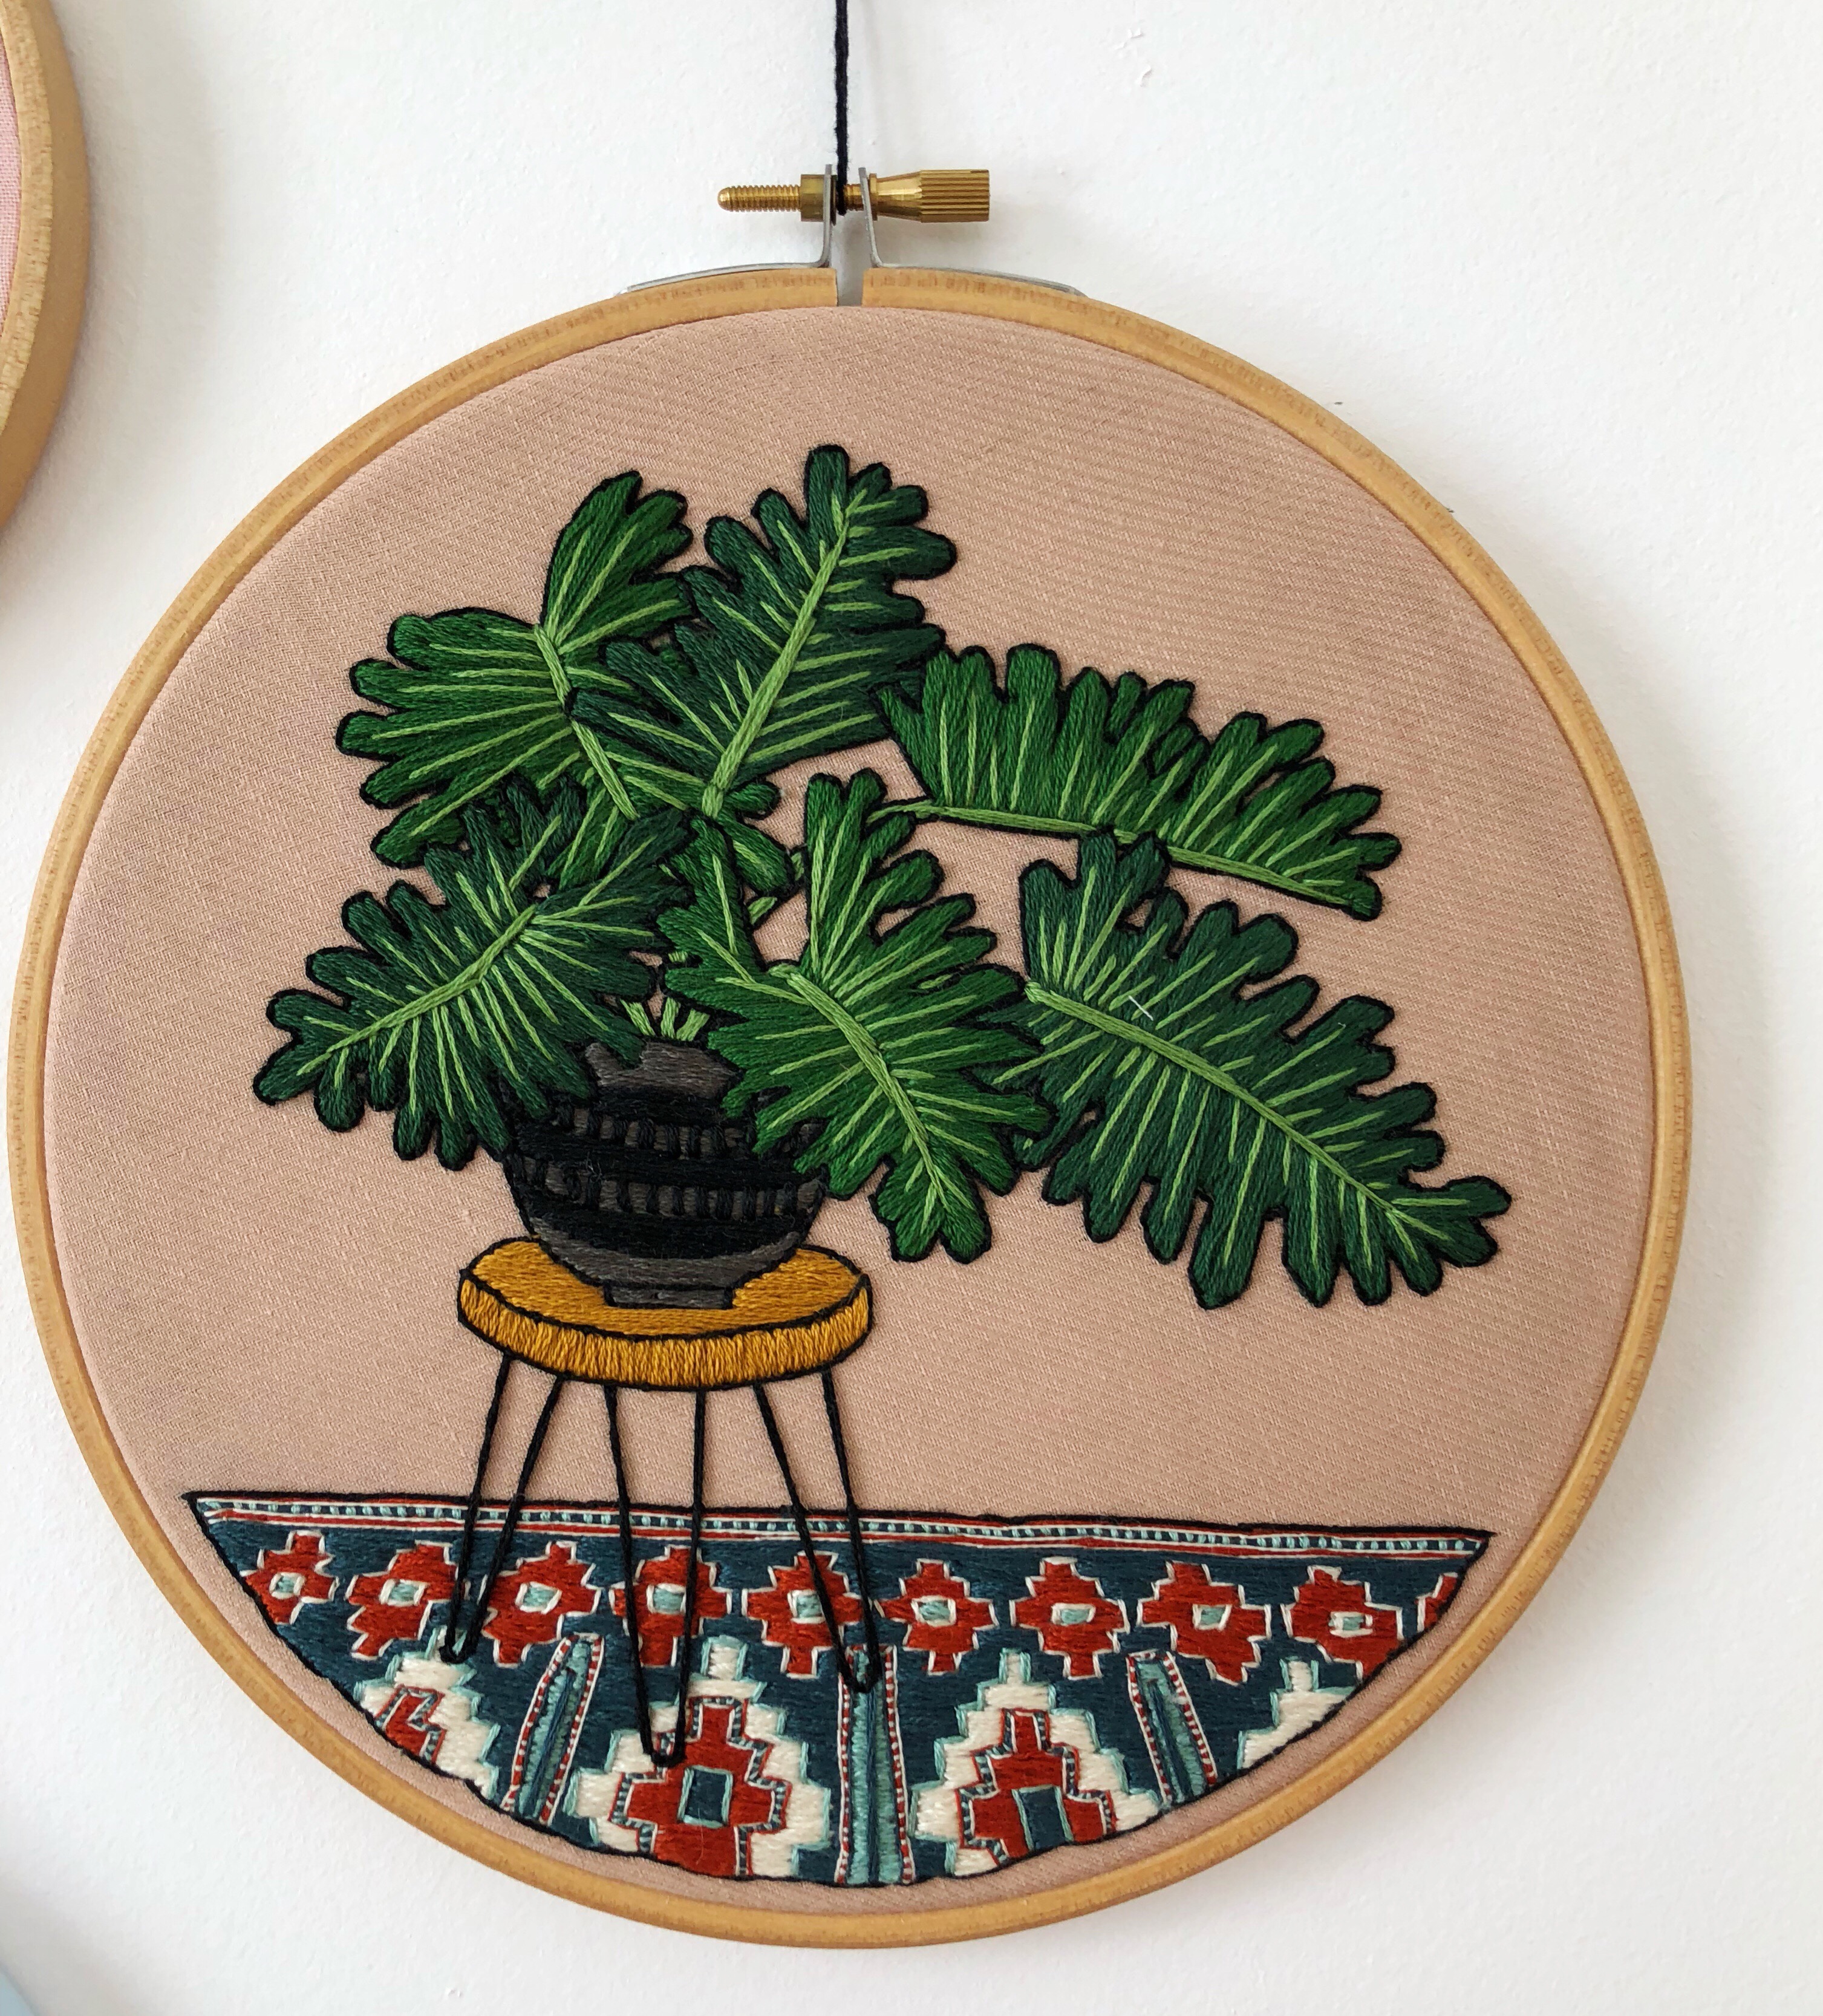 Elephant ear embroidery by Sarah K. Benning